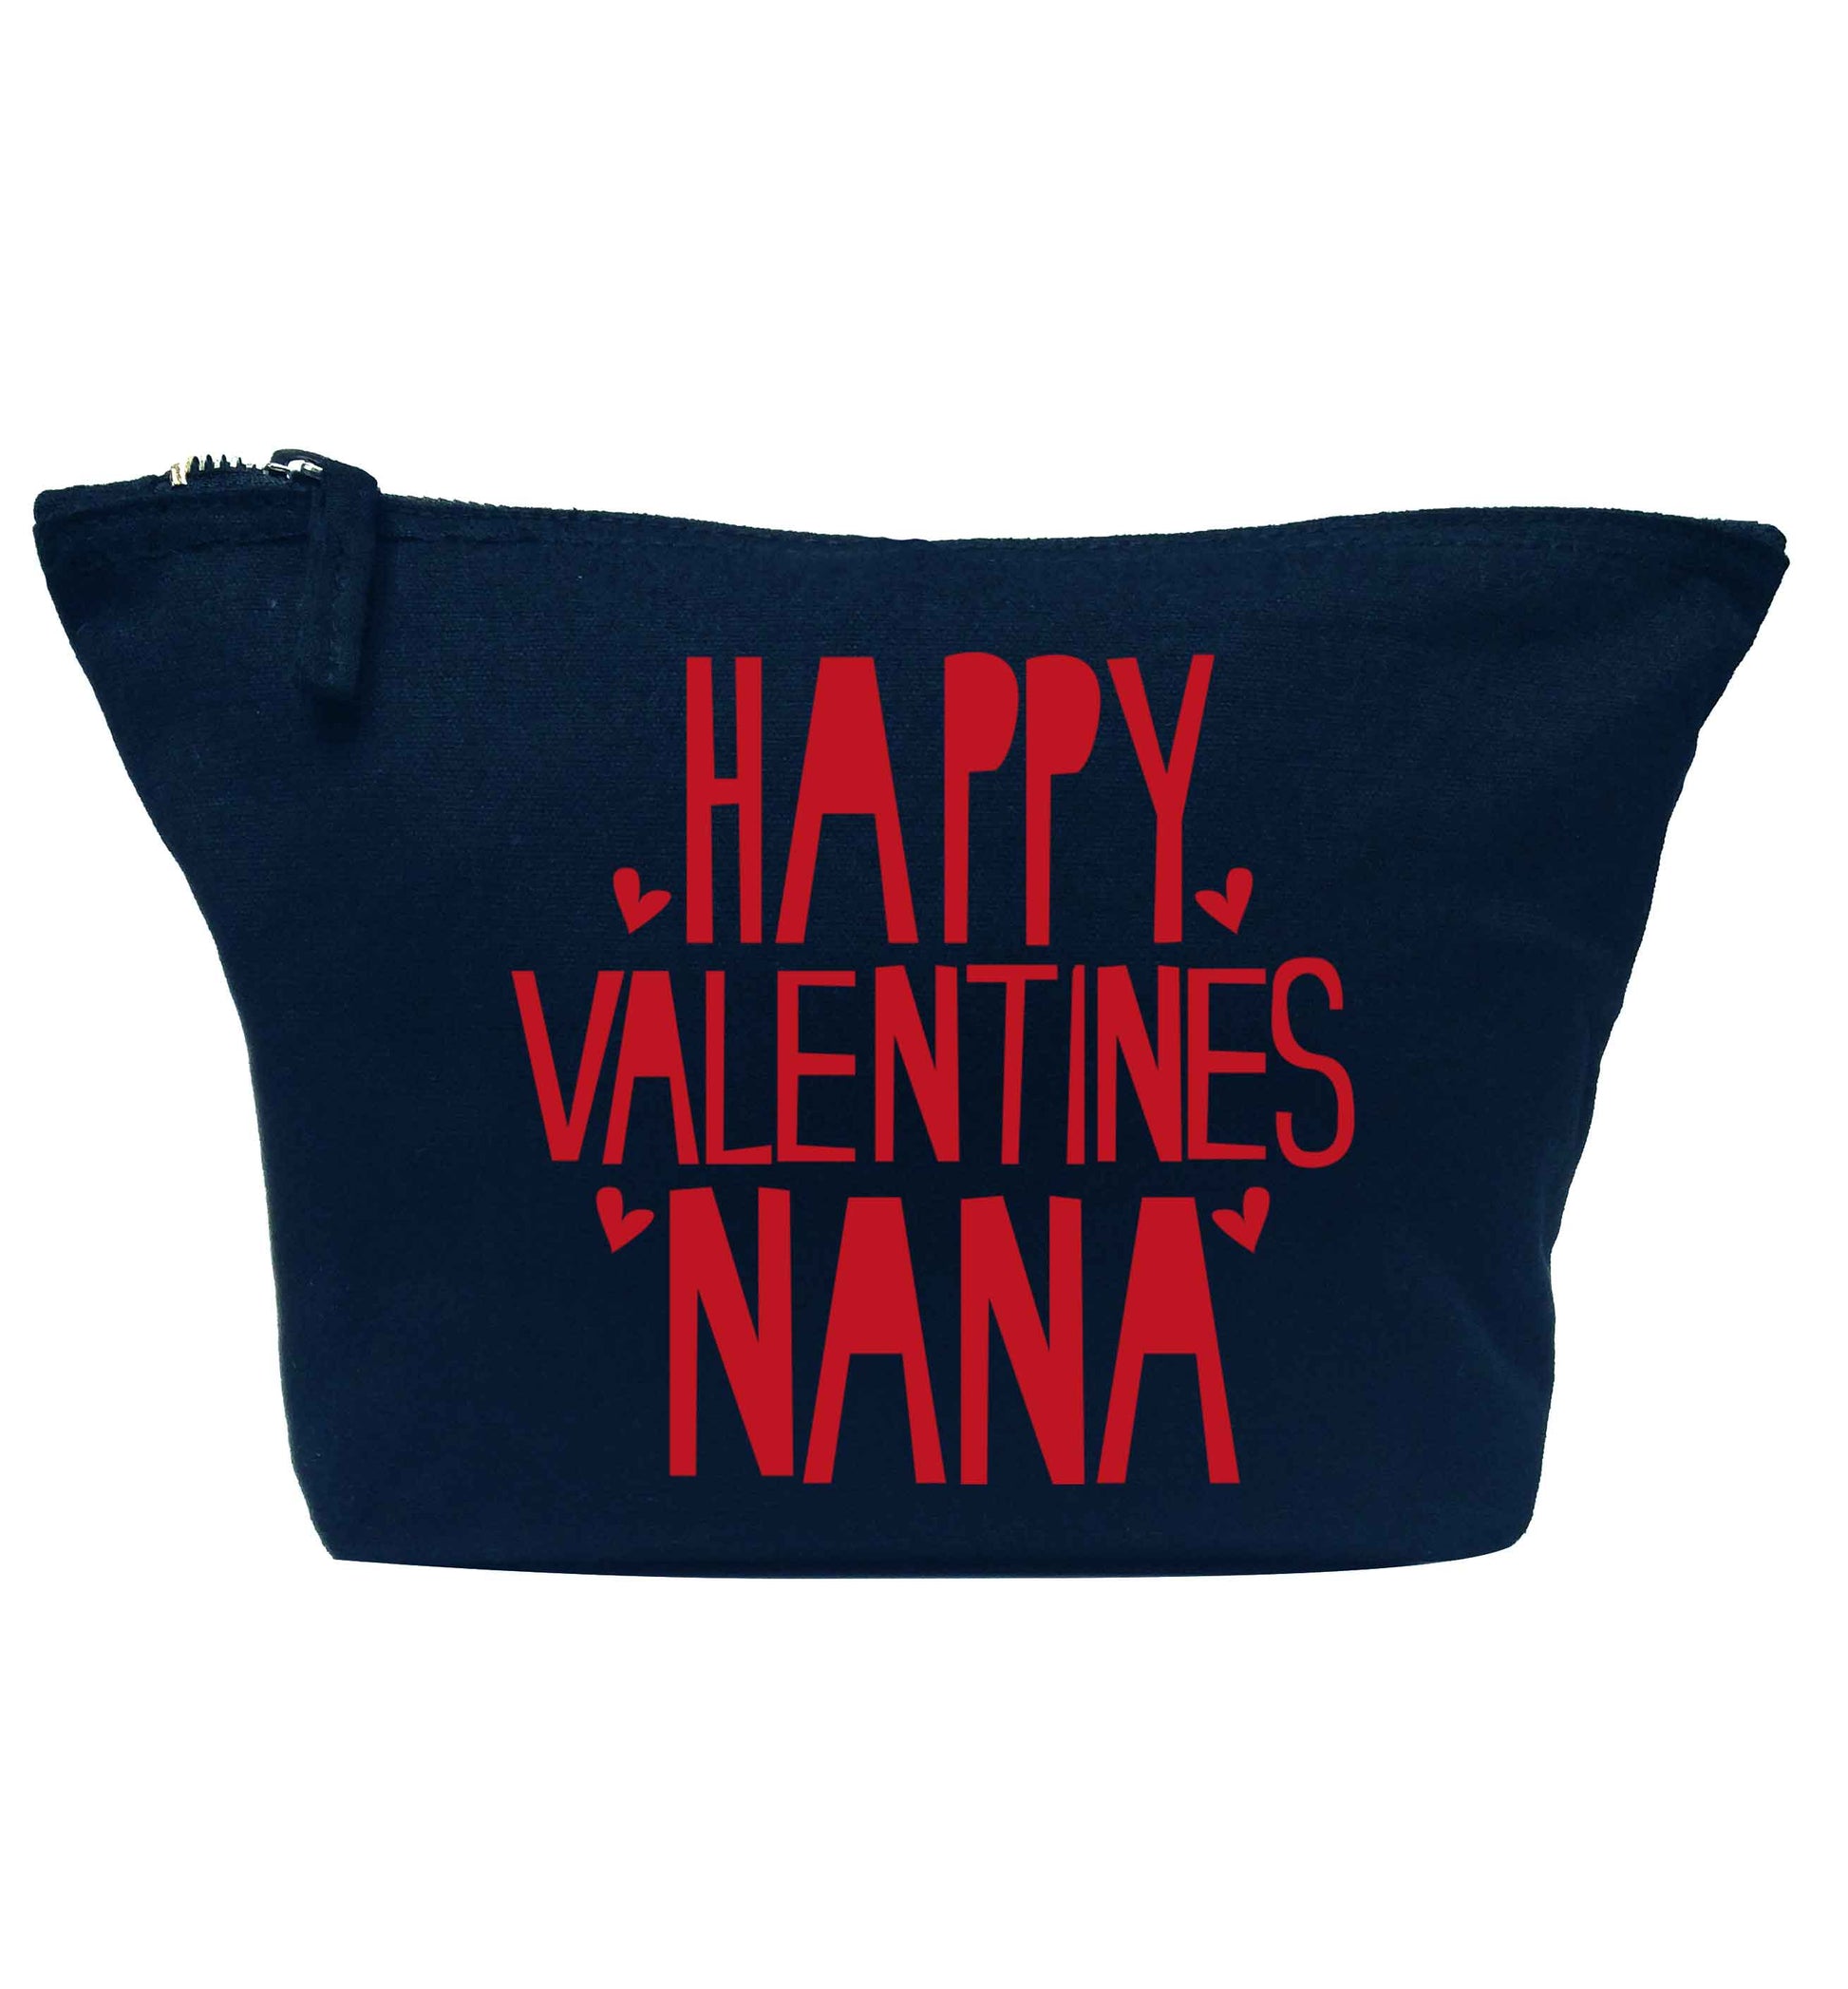 Happy valentines nana navy makeup bag